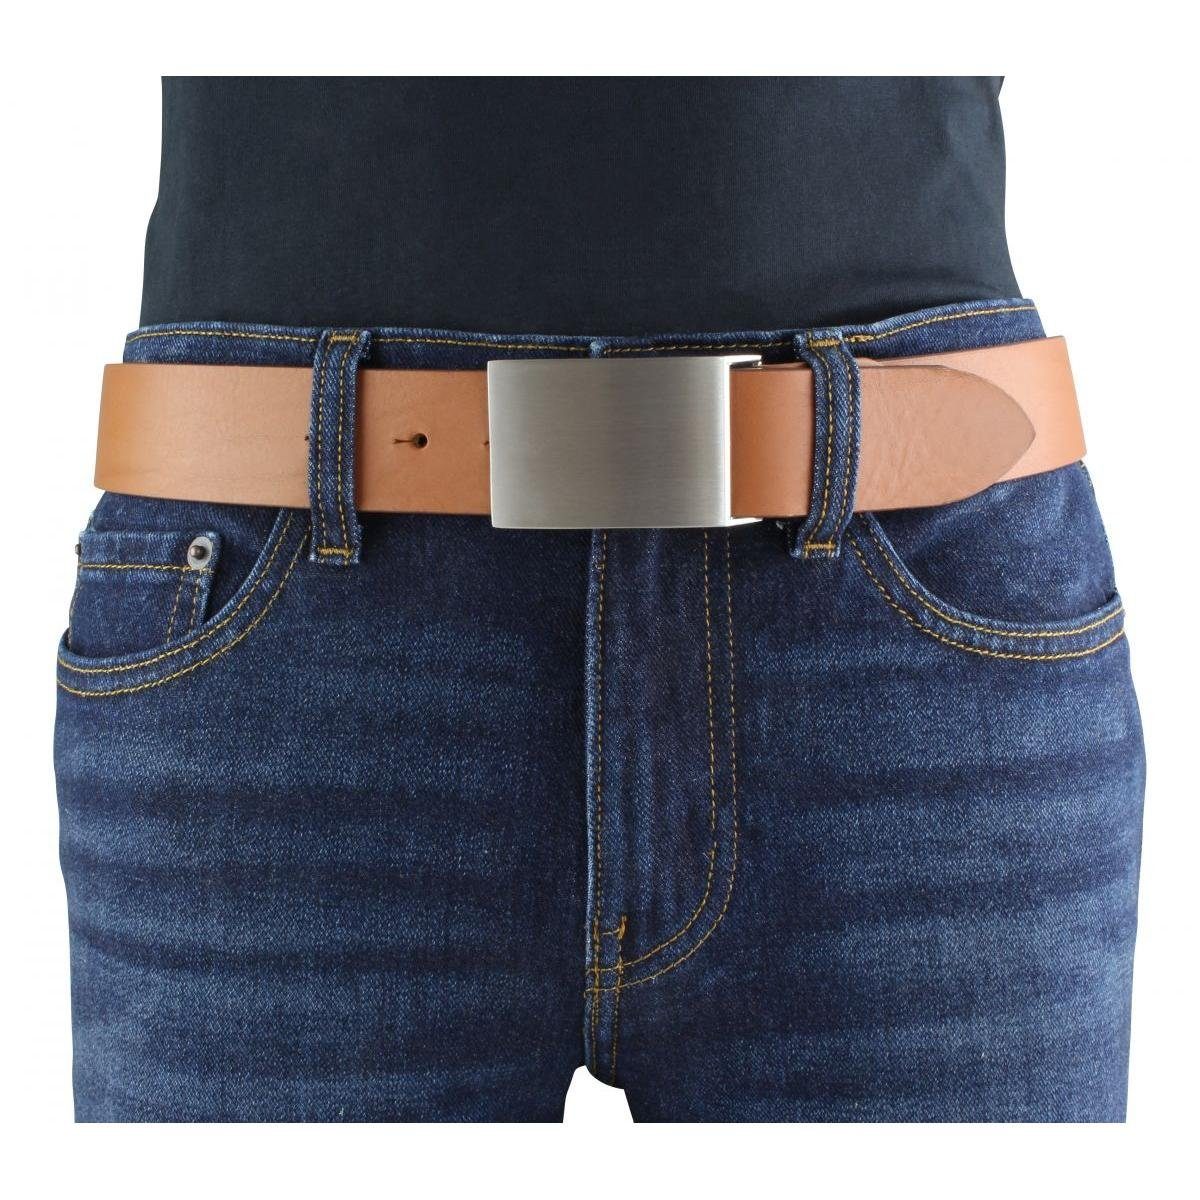 BELTINGER Ledergürtel Gürtel aus Vollrindleder cm - für Braun, Herren Silber - 4,0 40mm Jeans-Gürtel Jeans